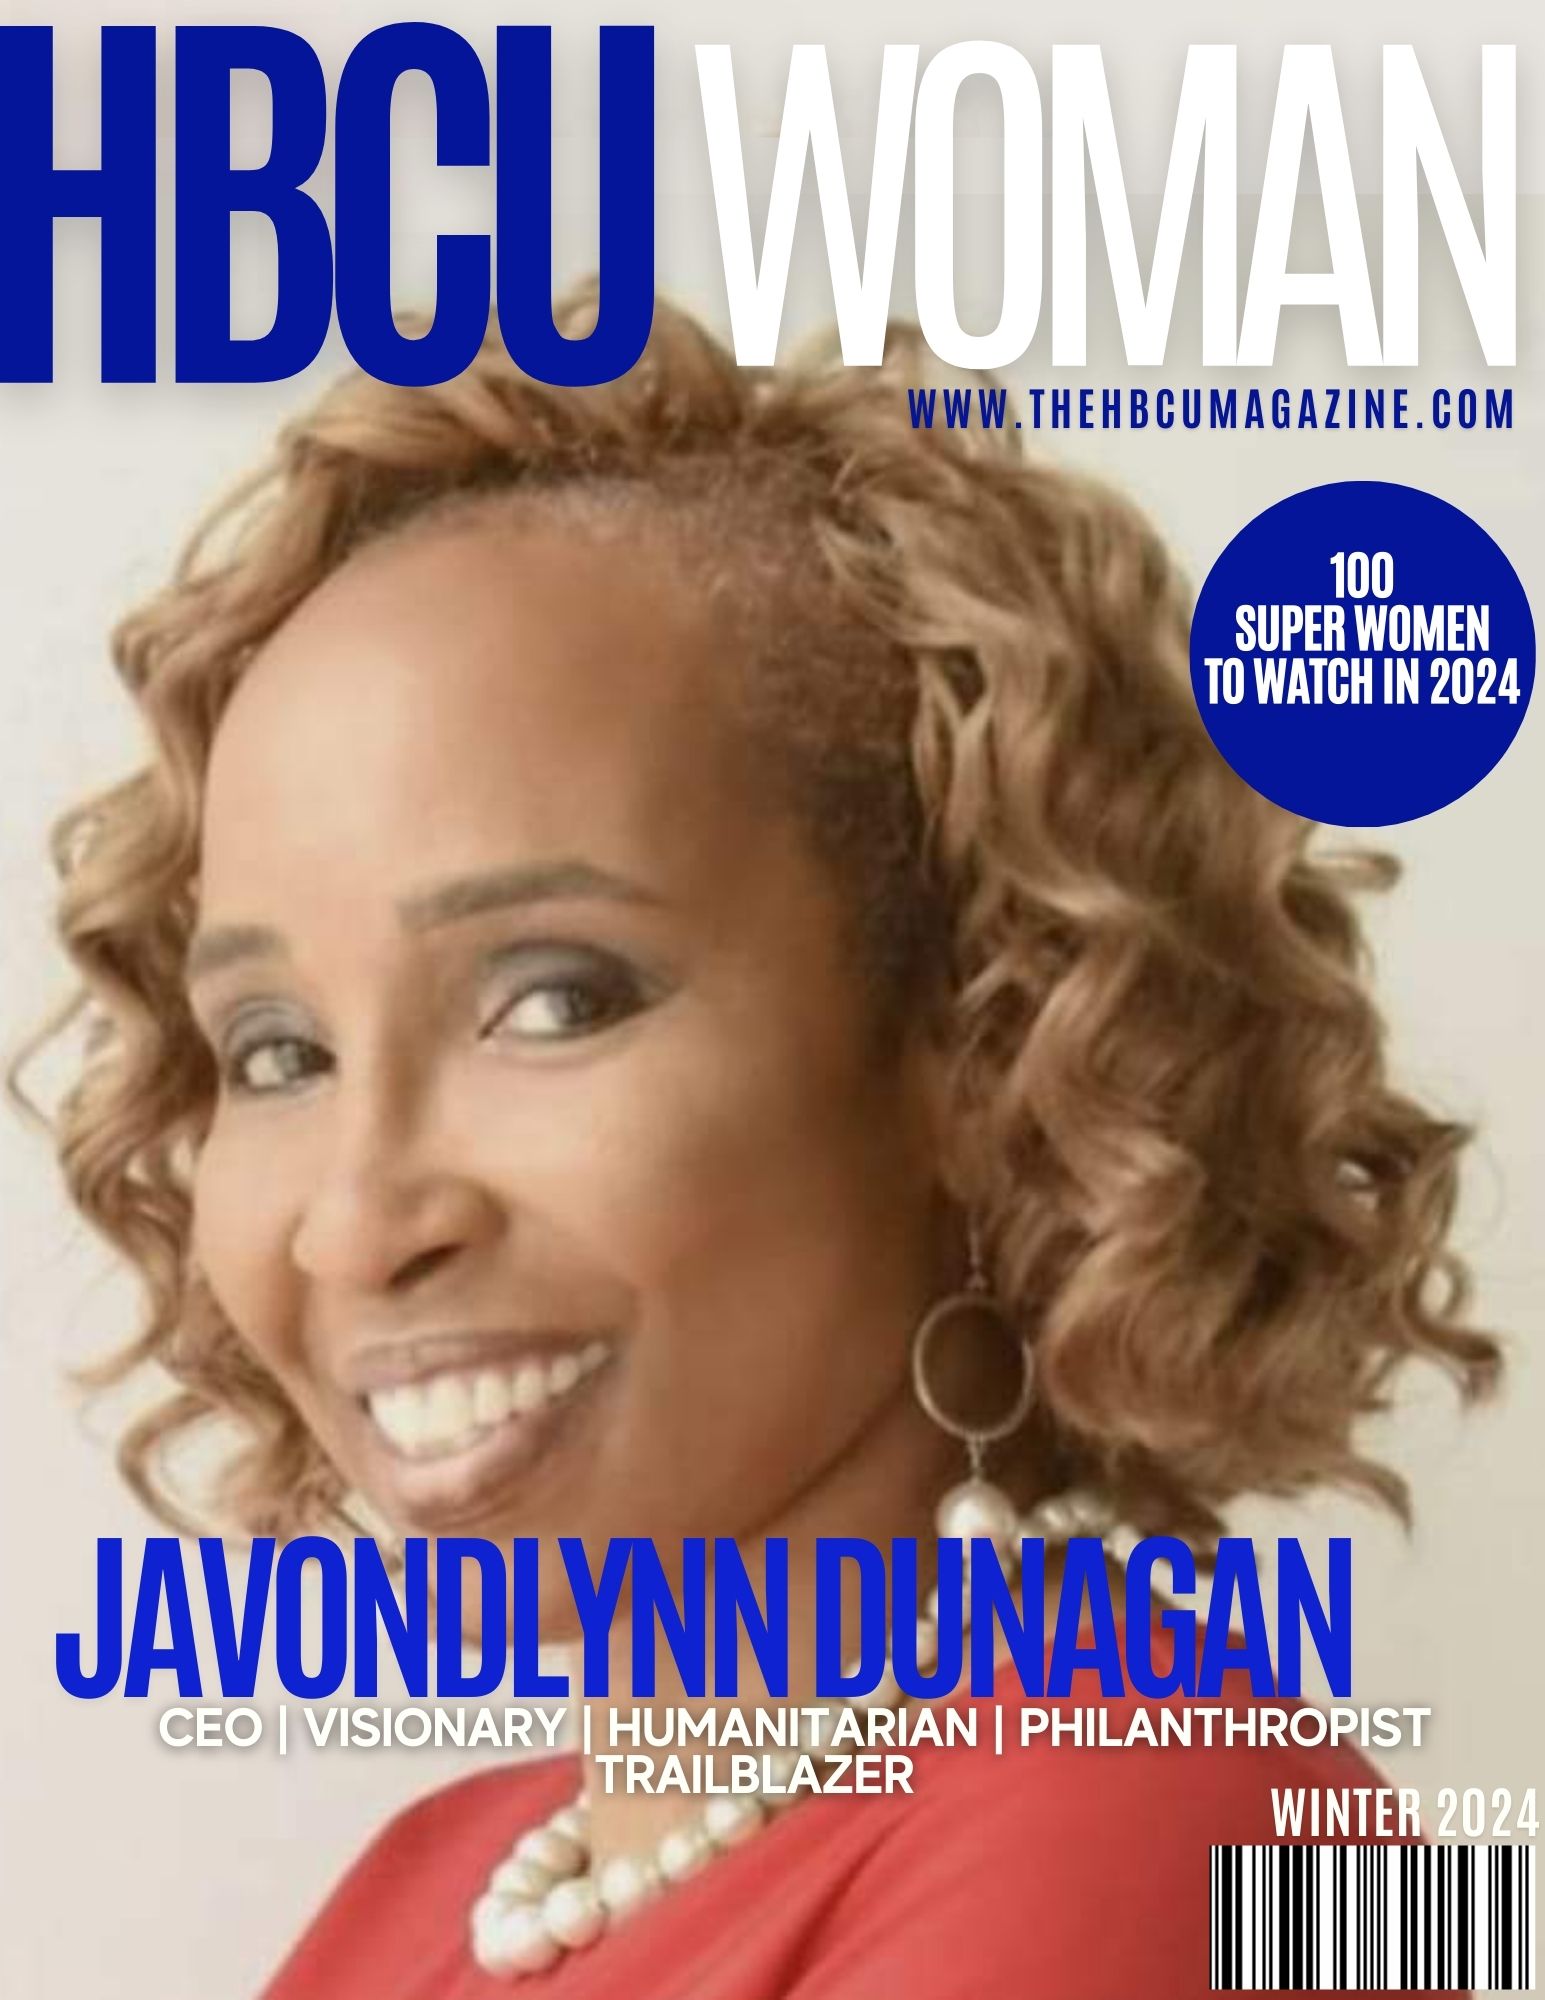 Meet Javondlynn Dunagan | HBCU Magazine